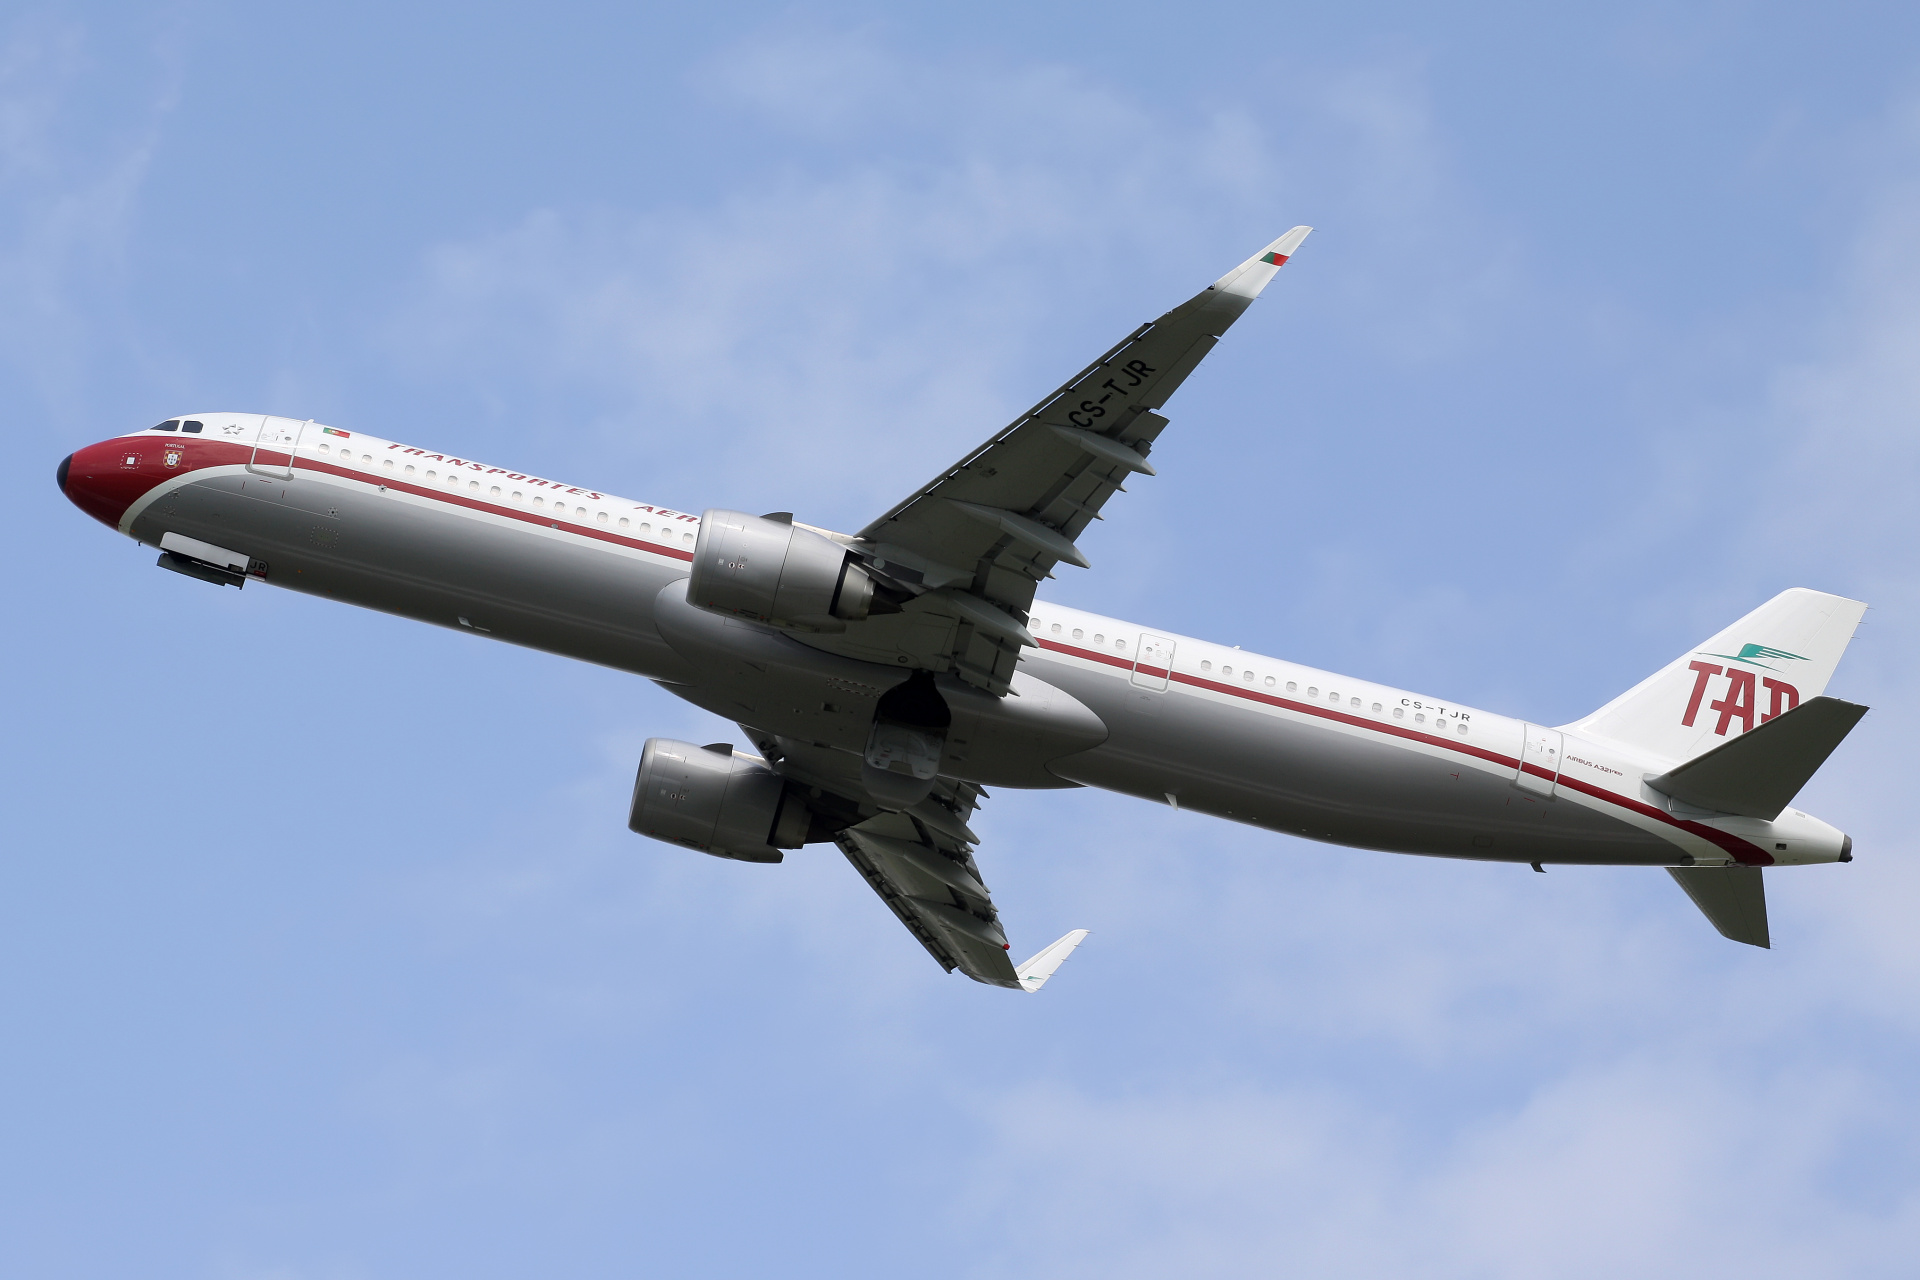 CS-TJR (retro livery) (Aircraft » EPWA Spotting » Airbus A321neo » TAP Air Portugal)